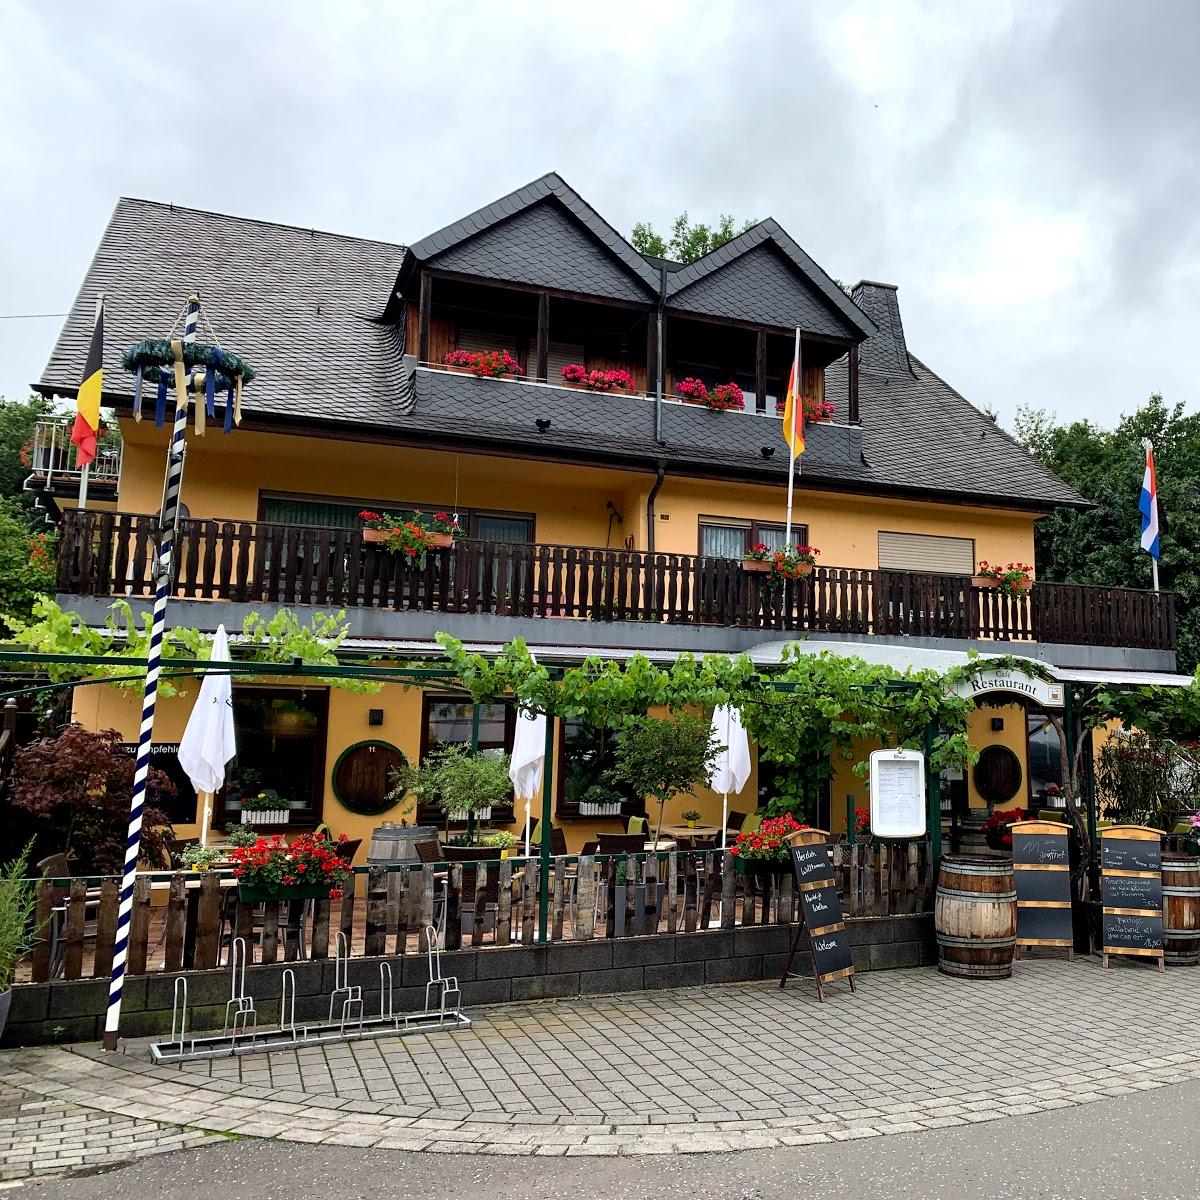 Restaurant "Hotel Zur Brücke" in Senheim (Mosel)